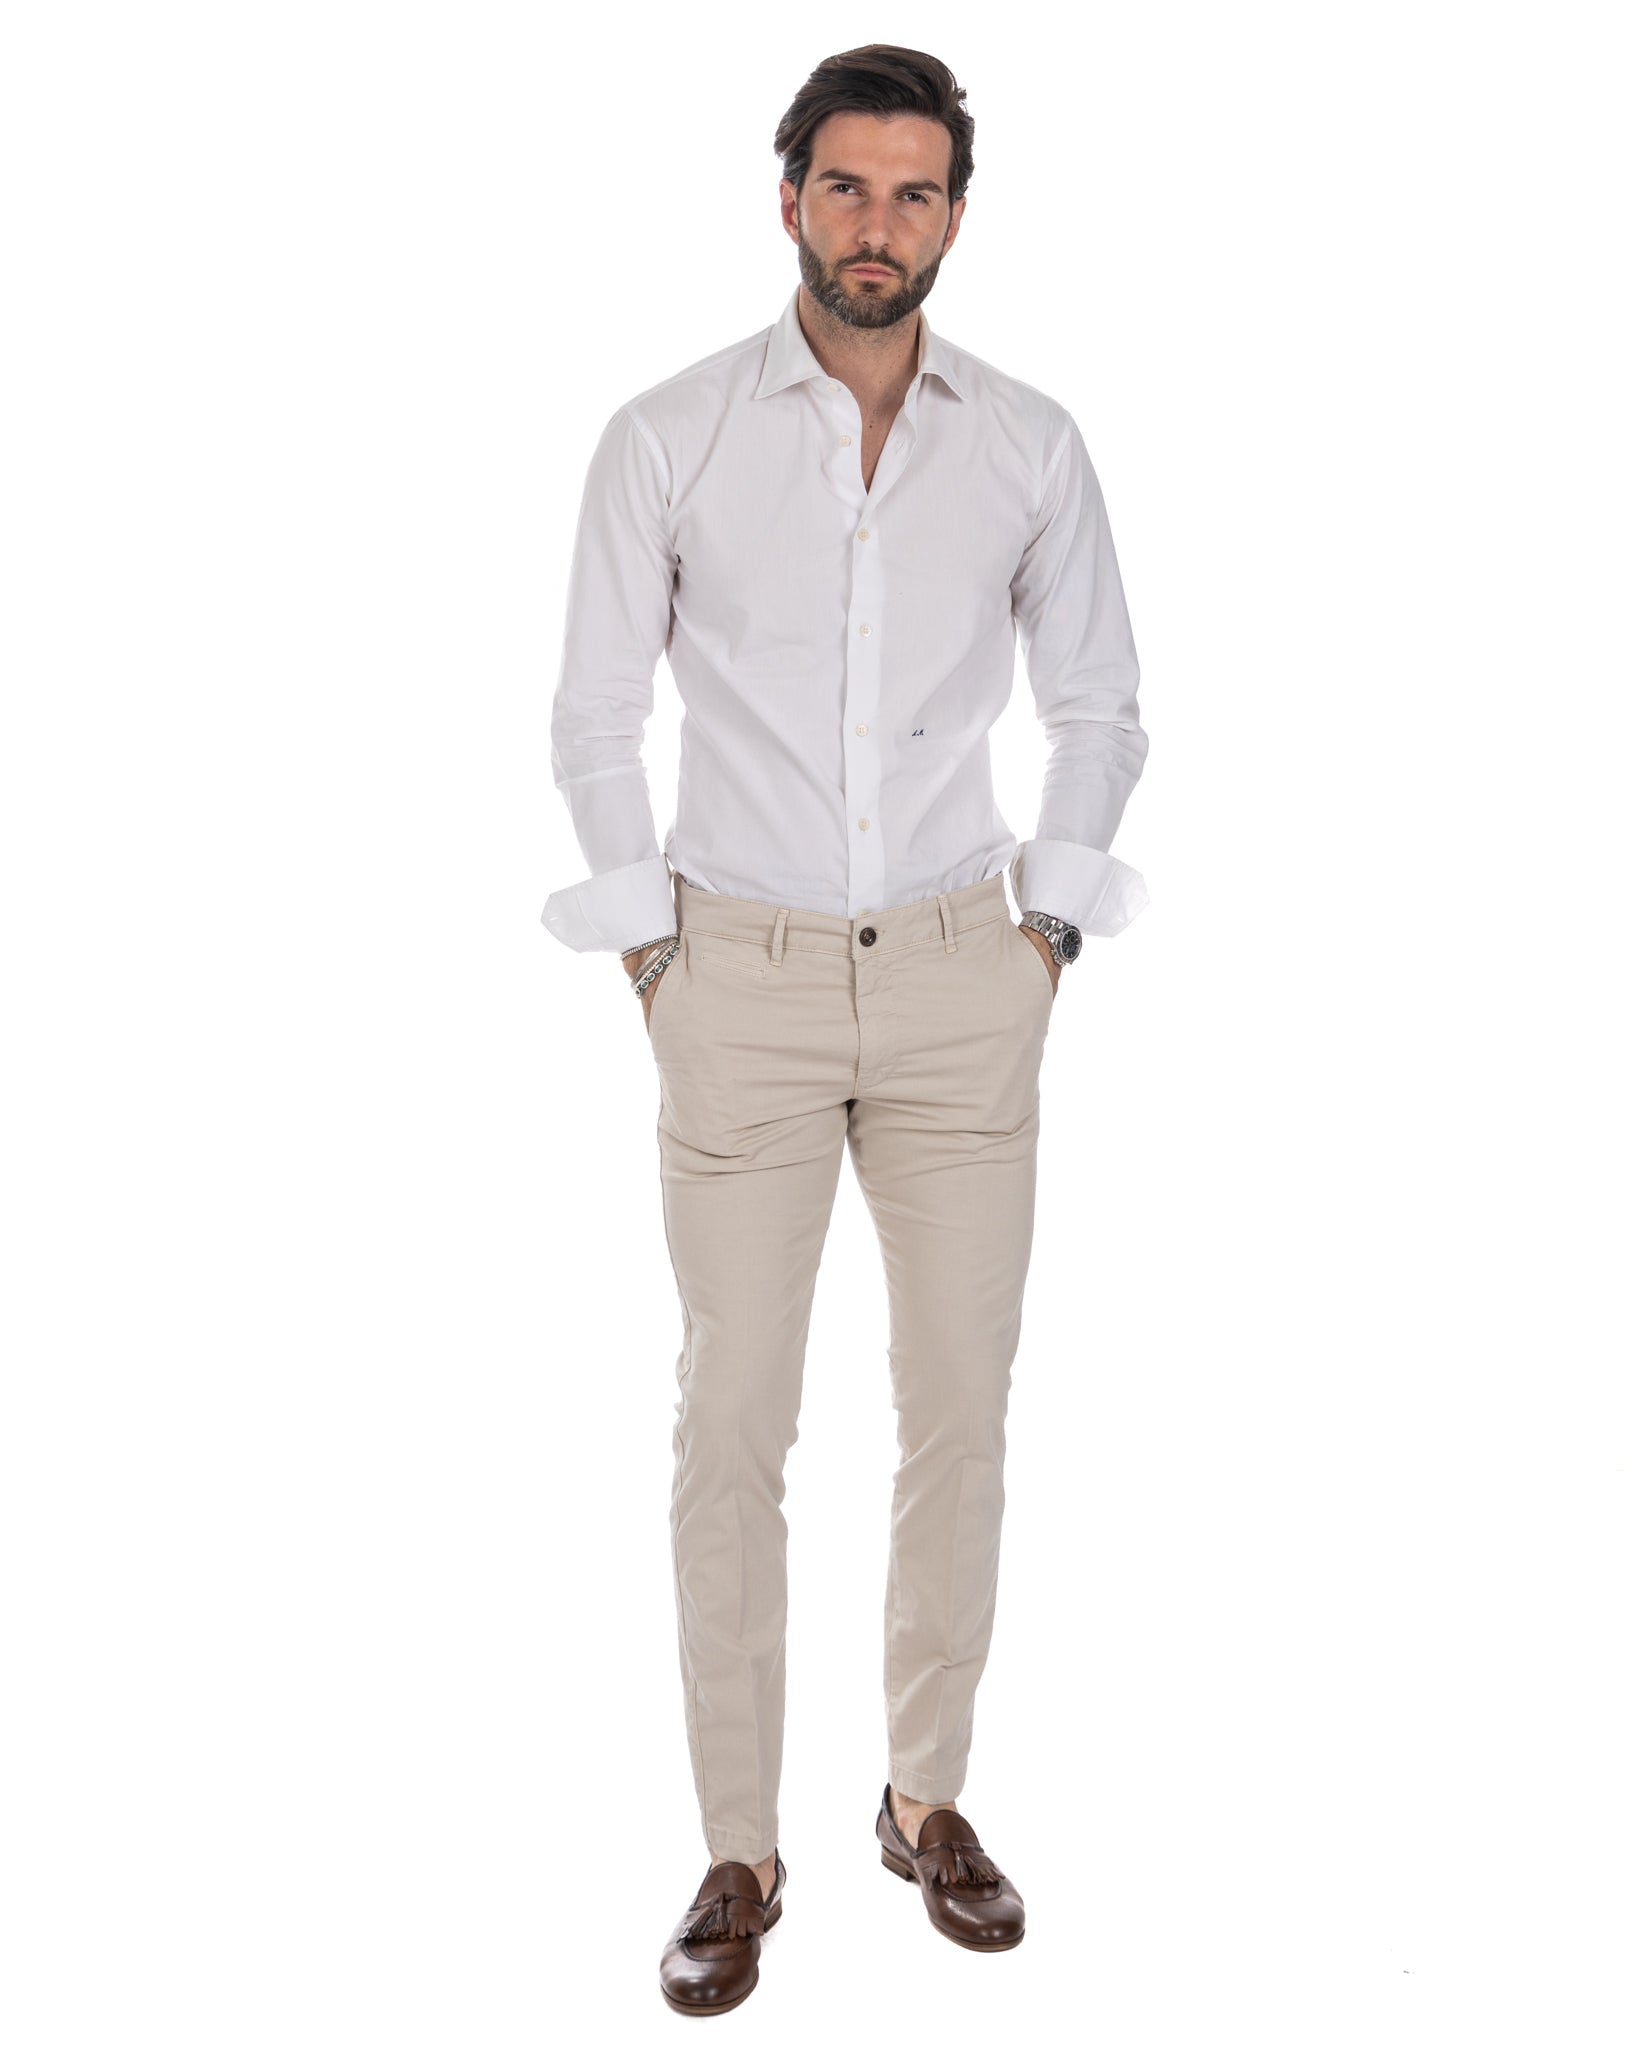 Frank - beige basic trousers